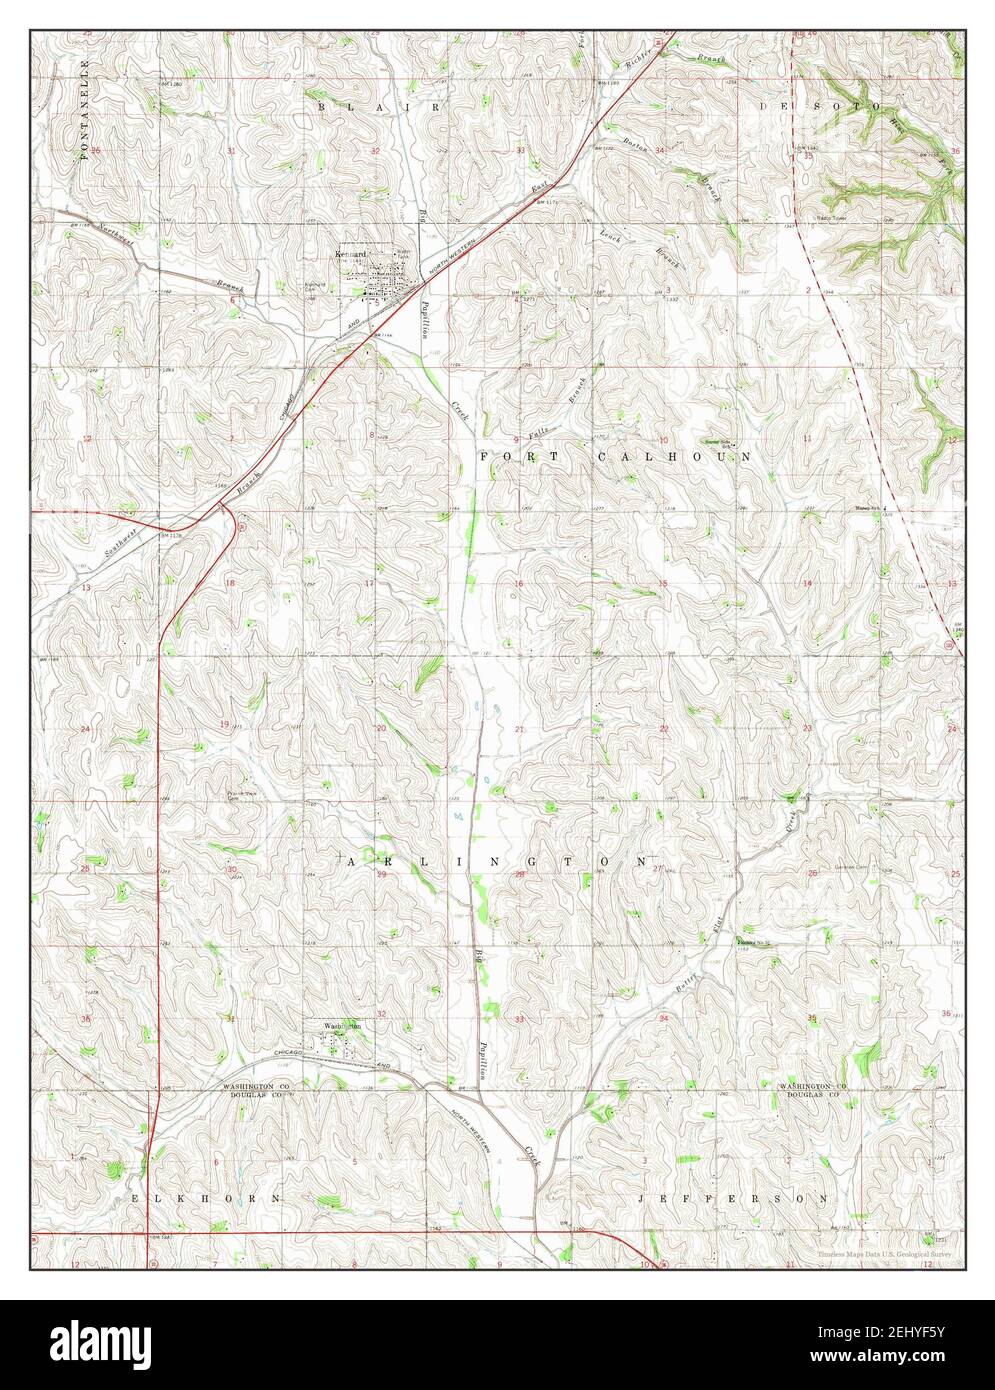 Kennard, Nebraska, map 1968, 1:24000, United States of America by Timeless Maps, data U.S. Geological Survey Stock Photo